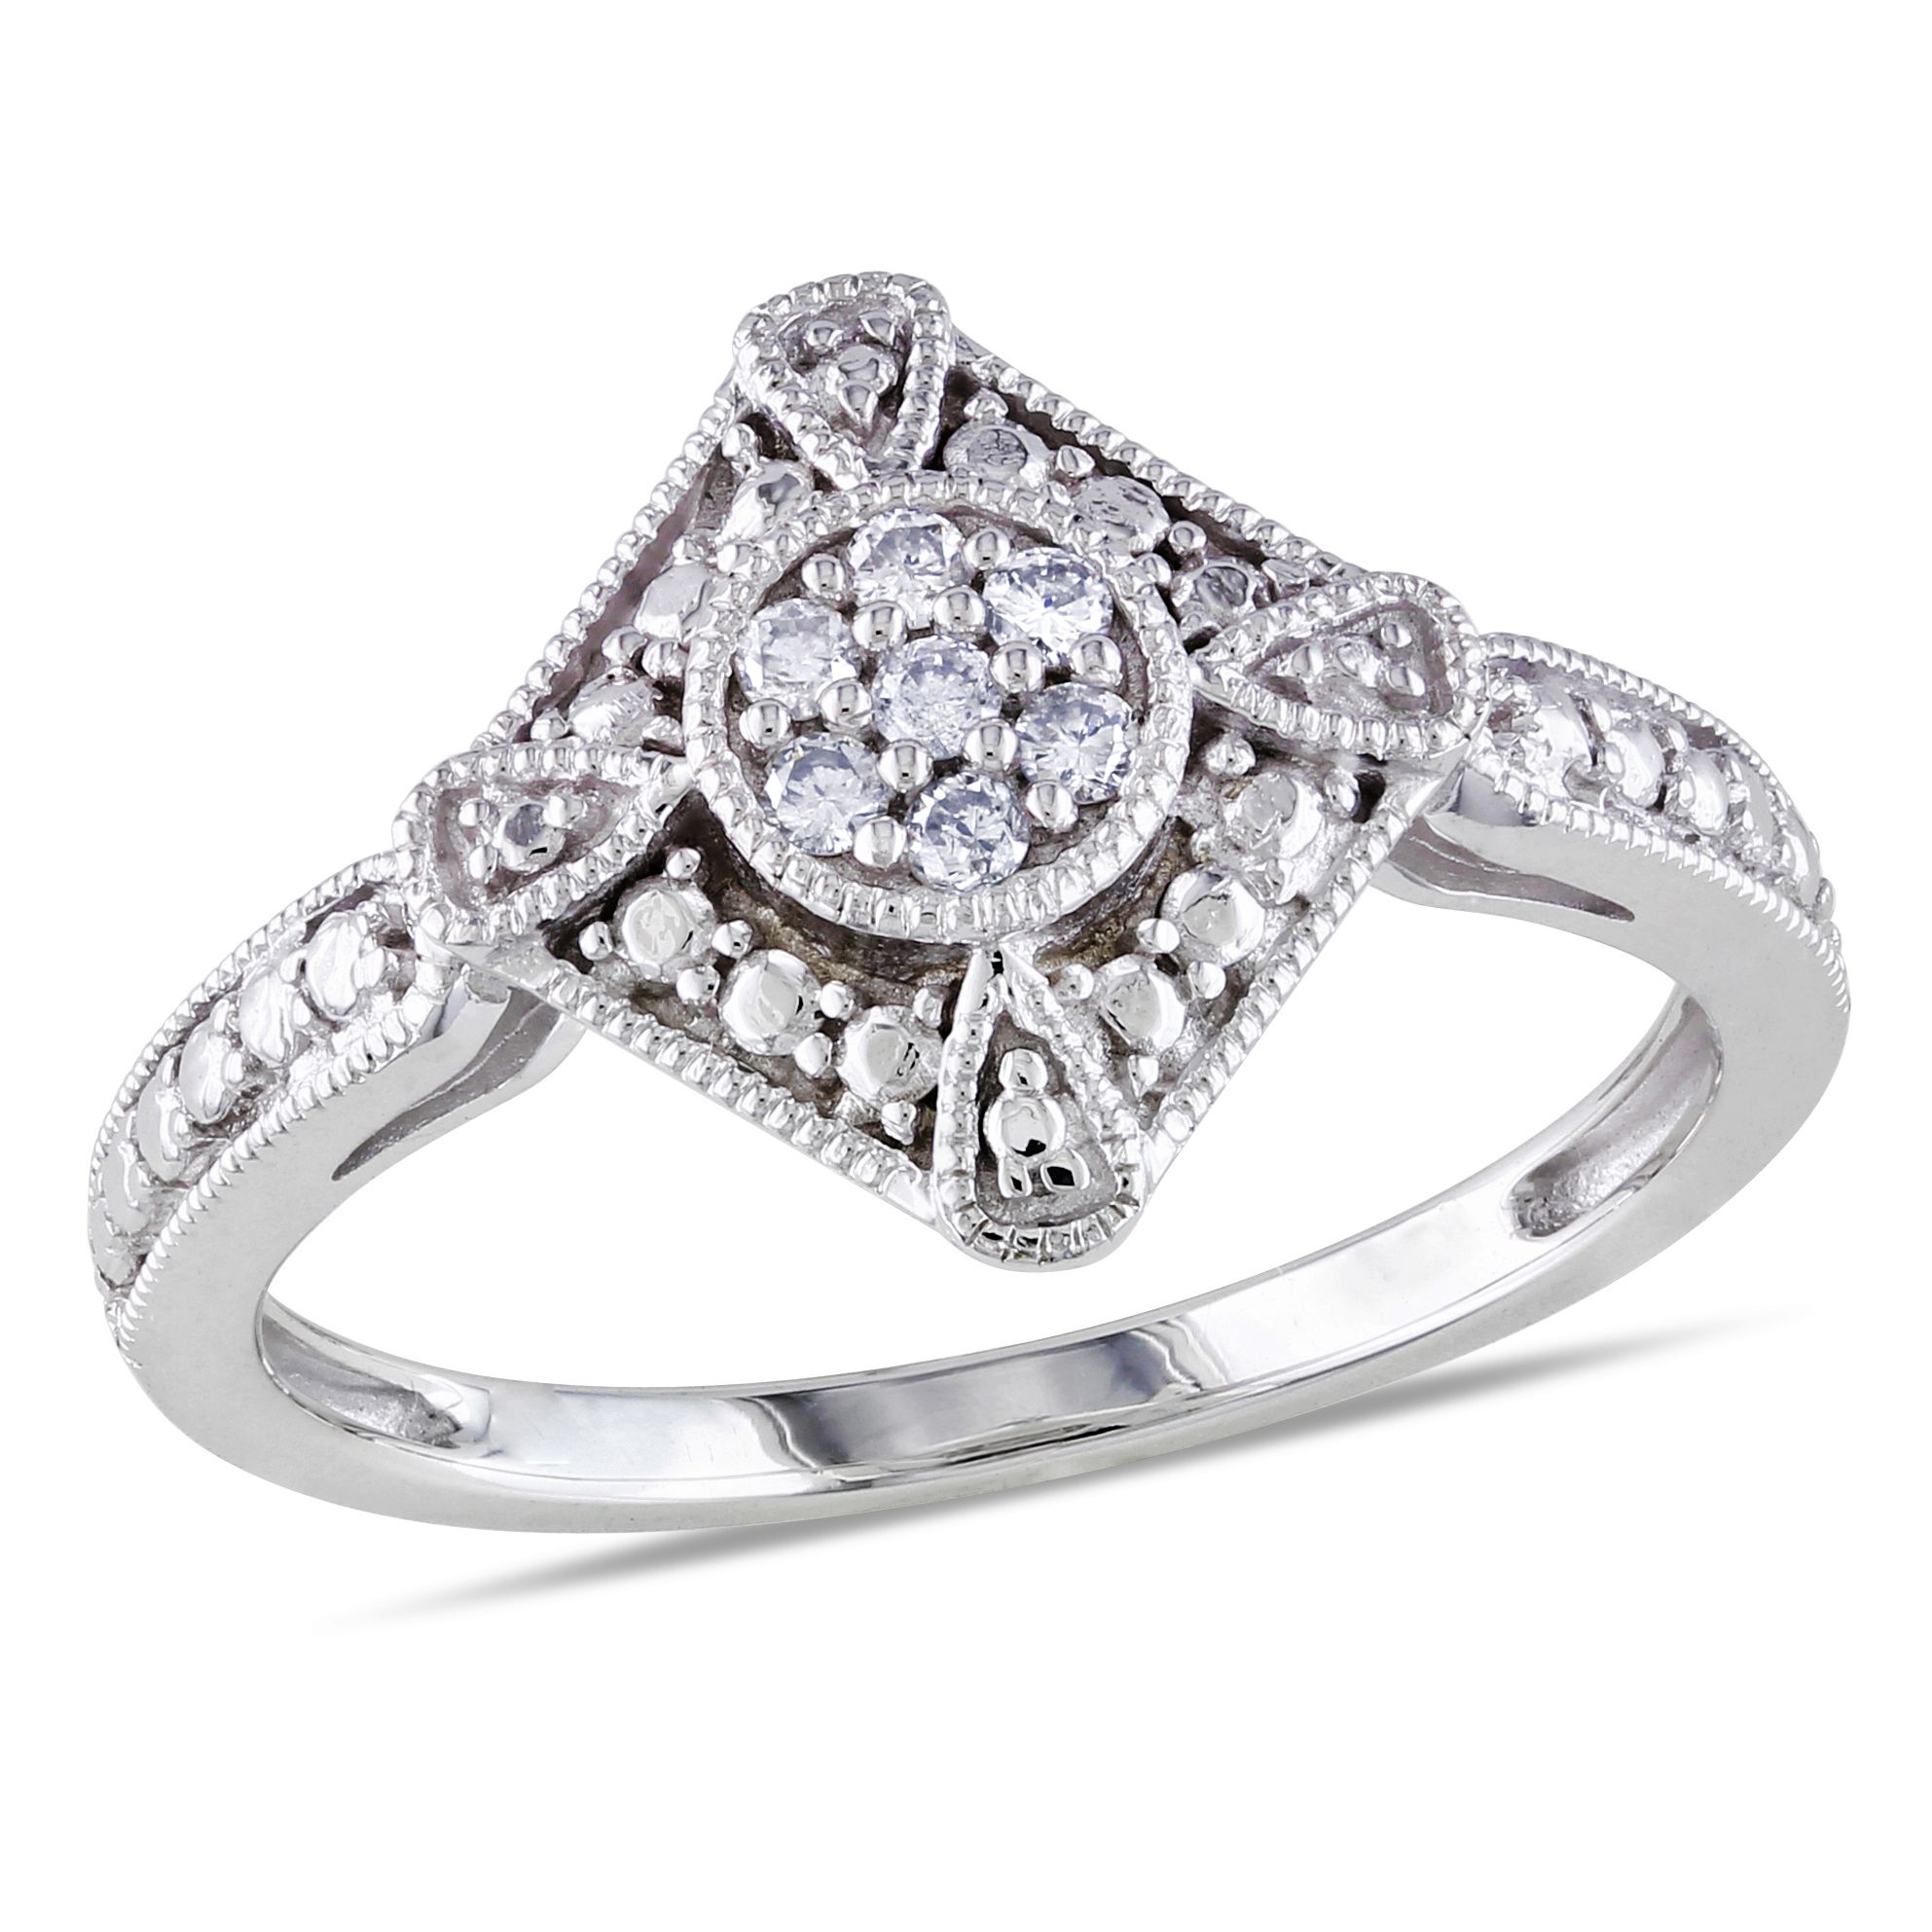 1/10 CTTW Diamond Fashion Ring Set in 10K White Gold (GH I1;I2)